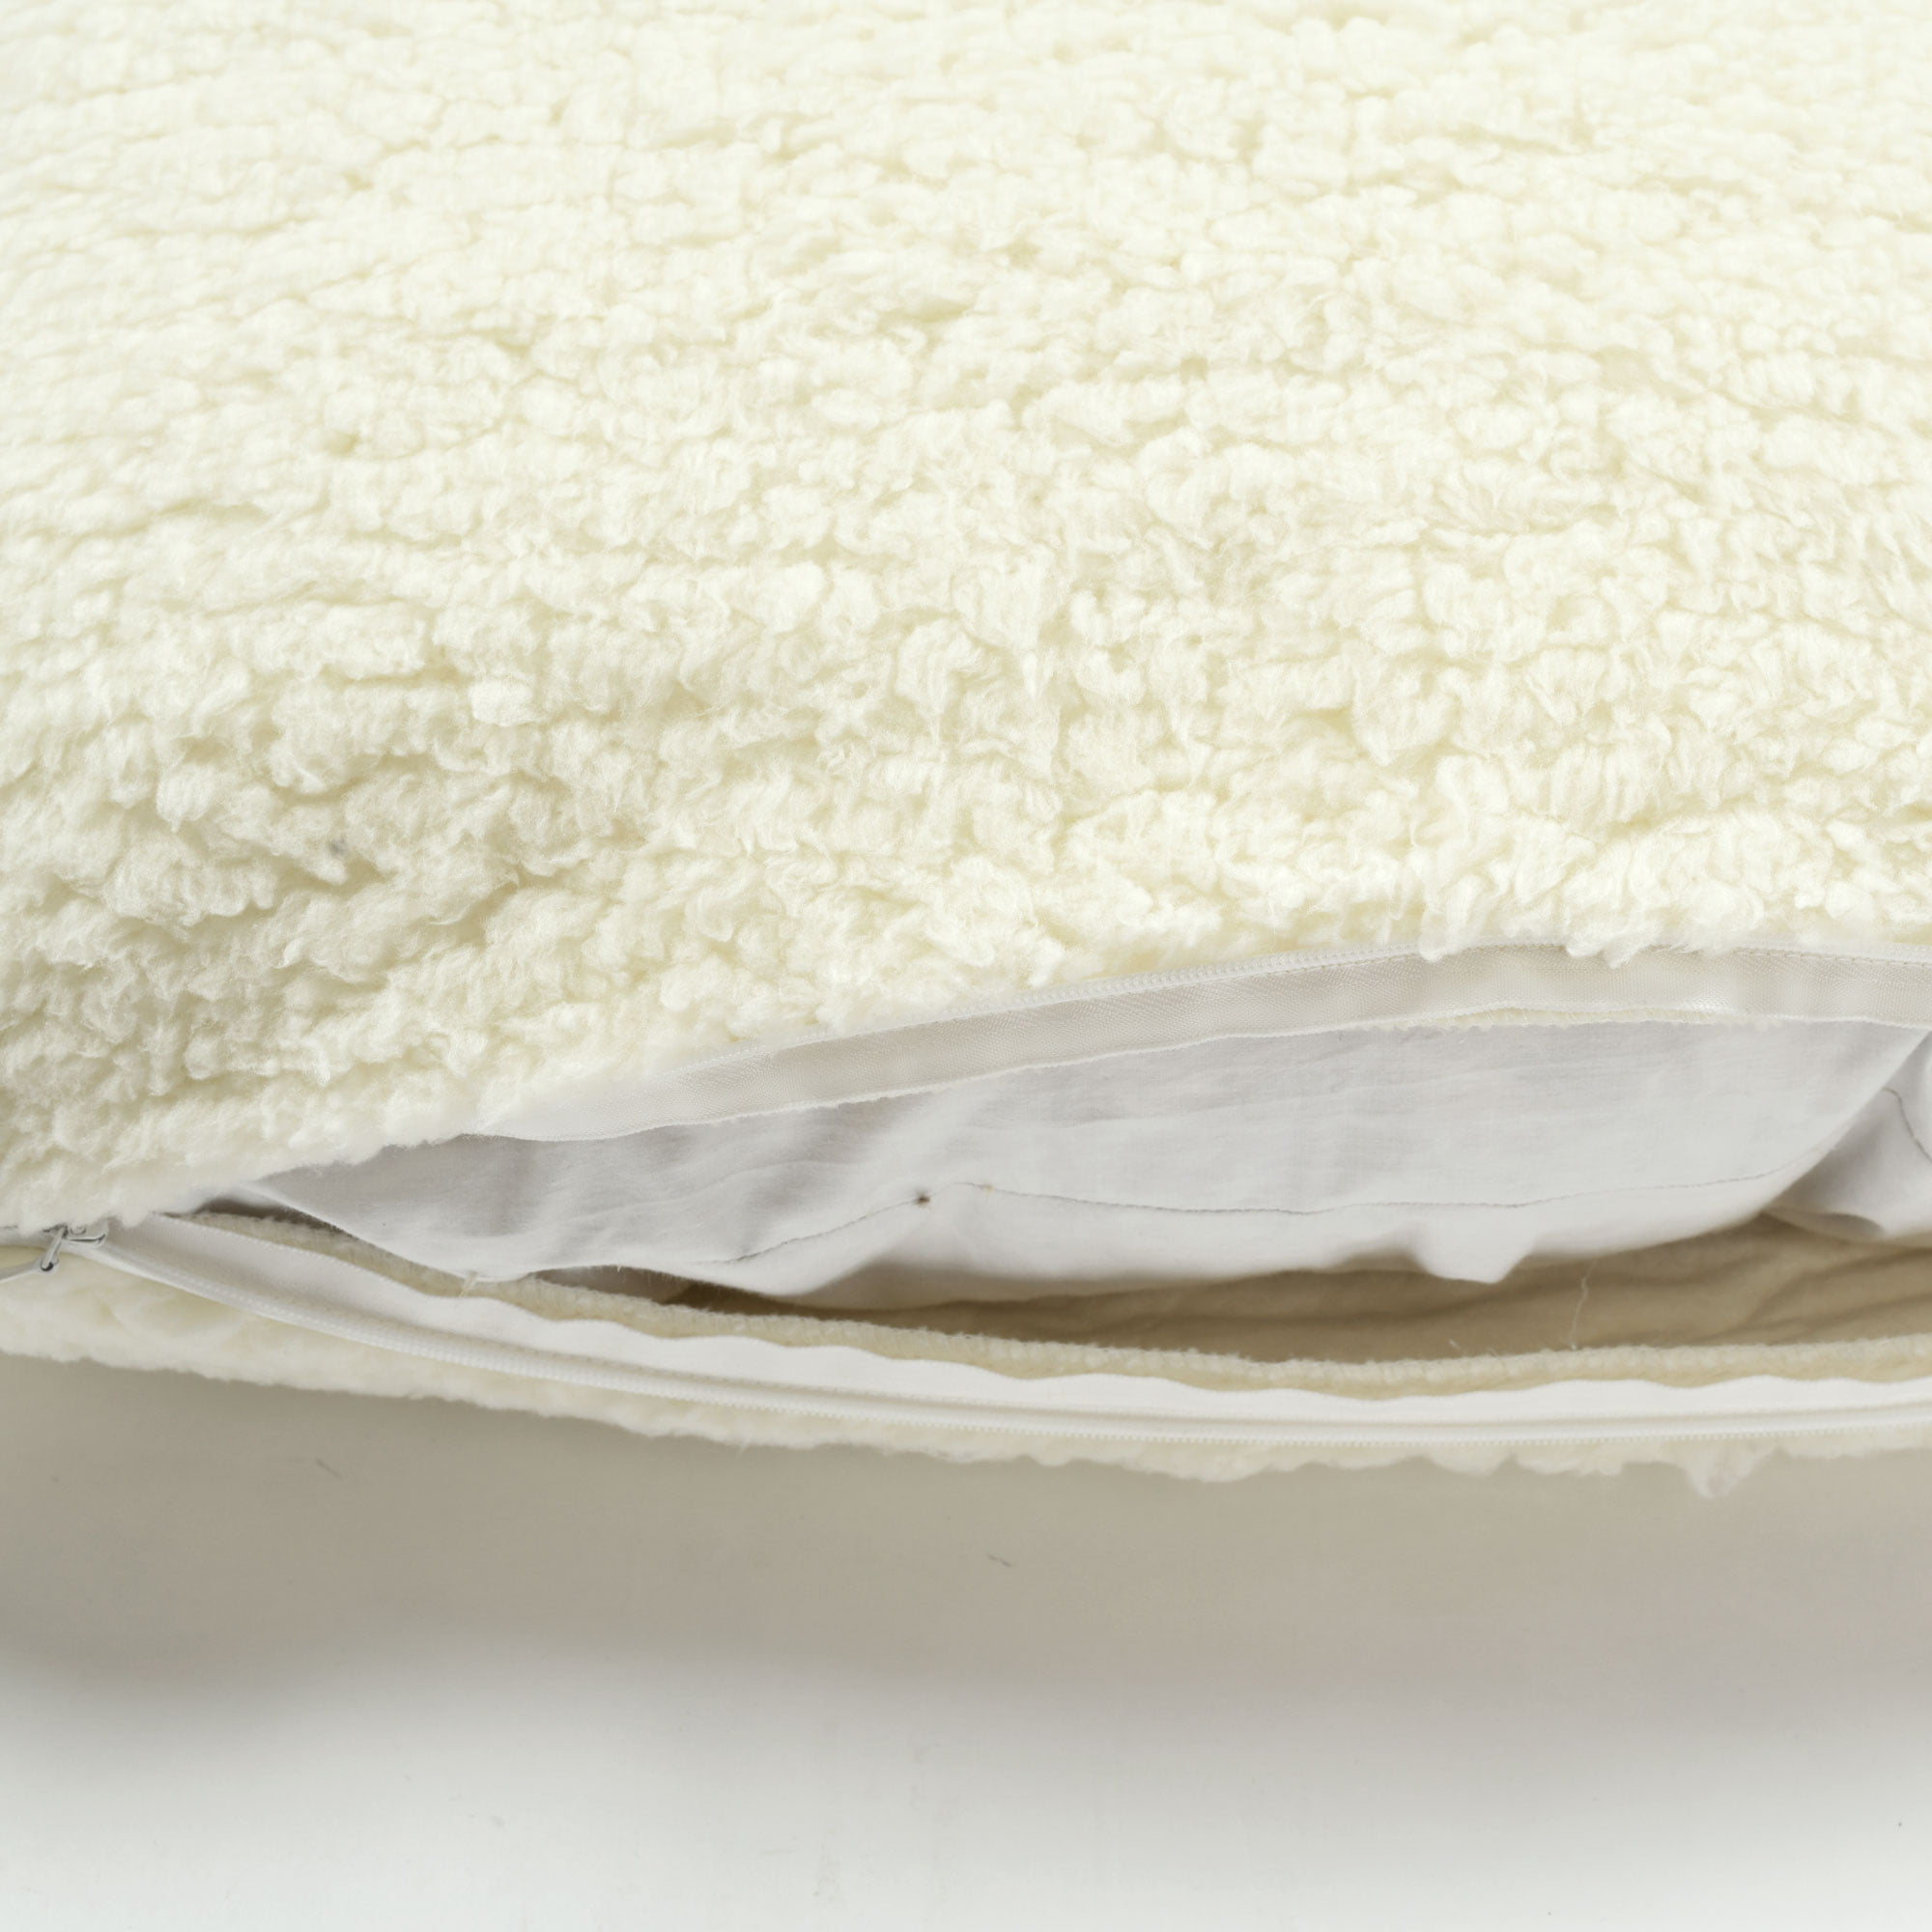 Lush Decor Cozy Soft Sherpa Reversible Decorative Pillow Cover 